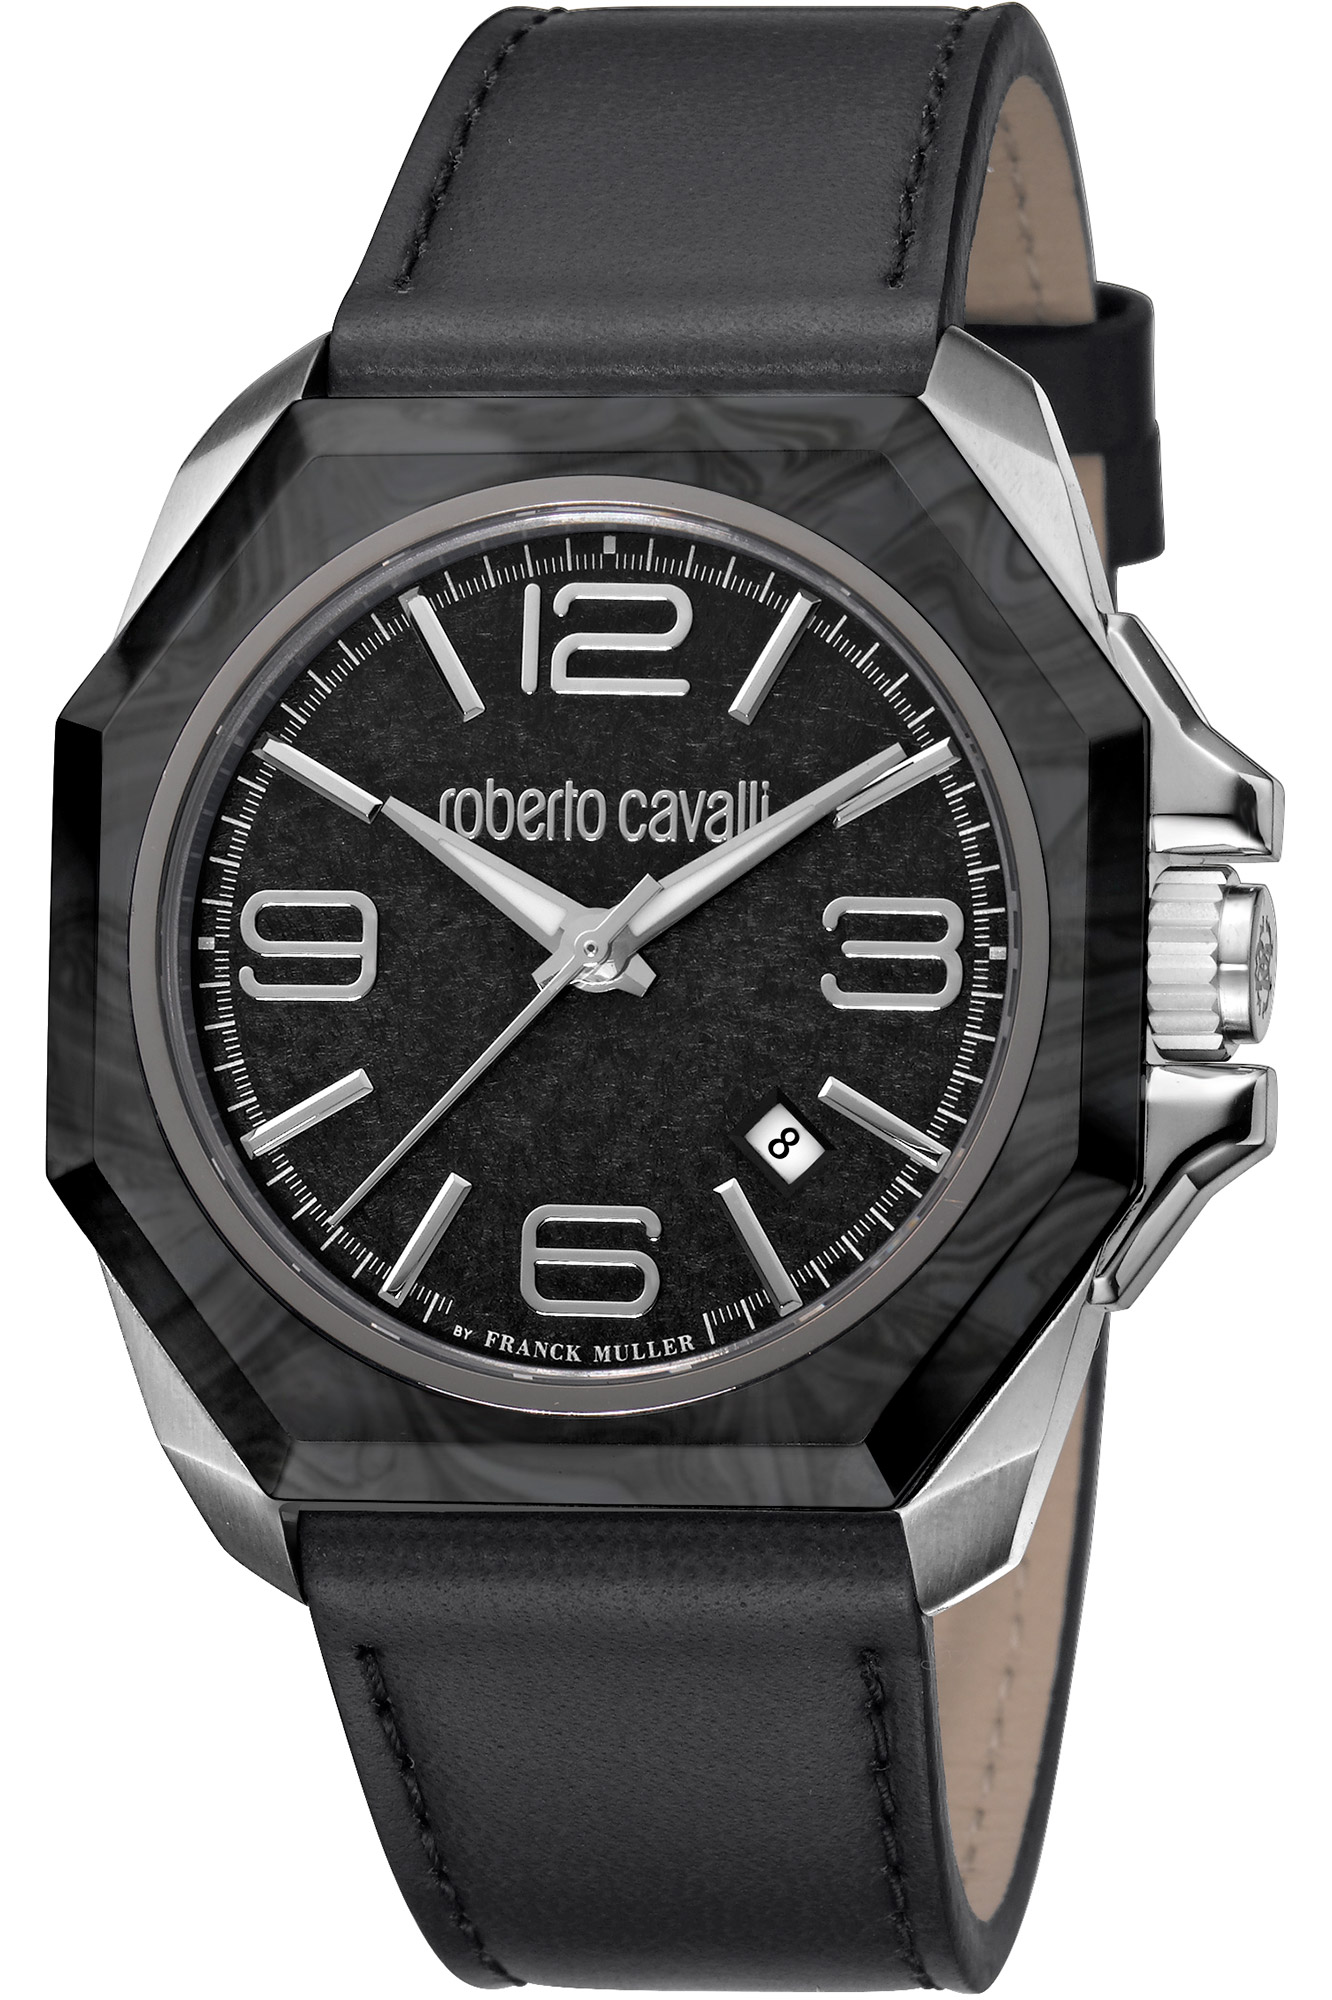 Reloj Roberto Cavalli by Franck Muller rv1g076l0051